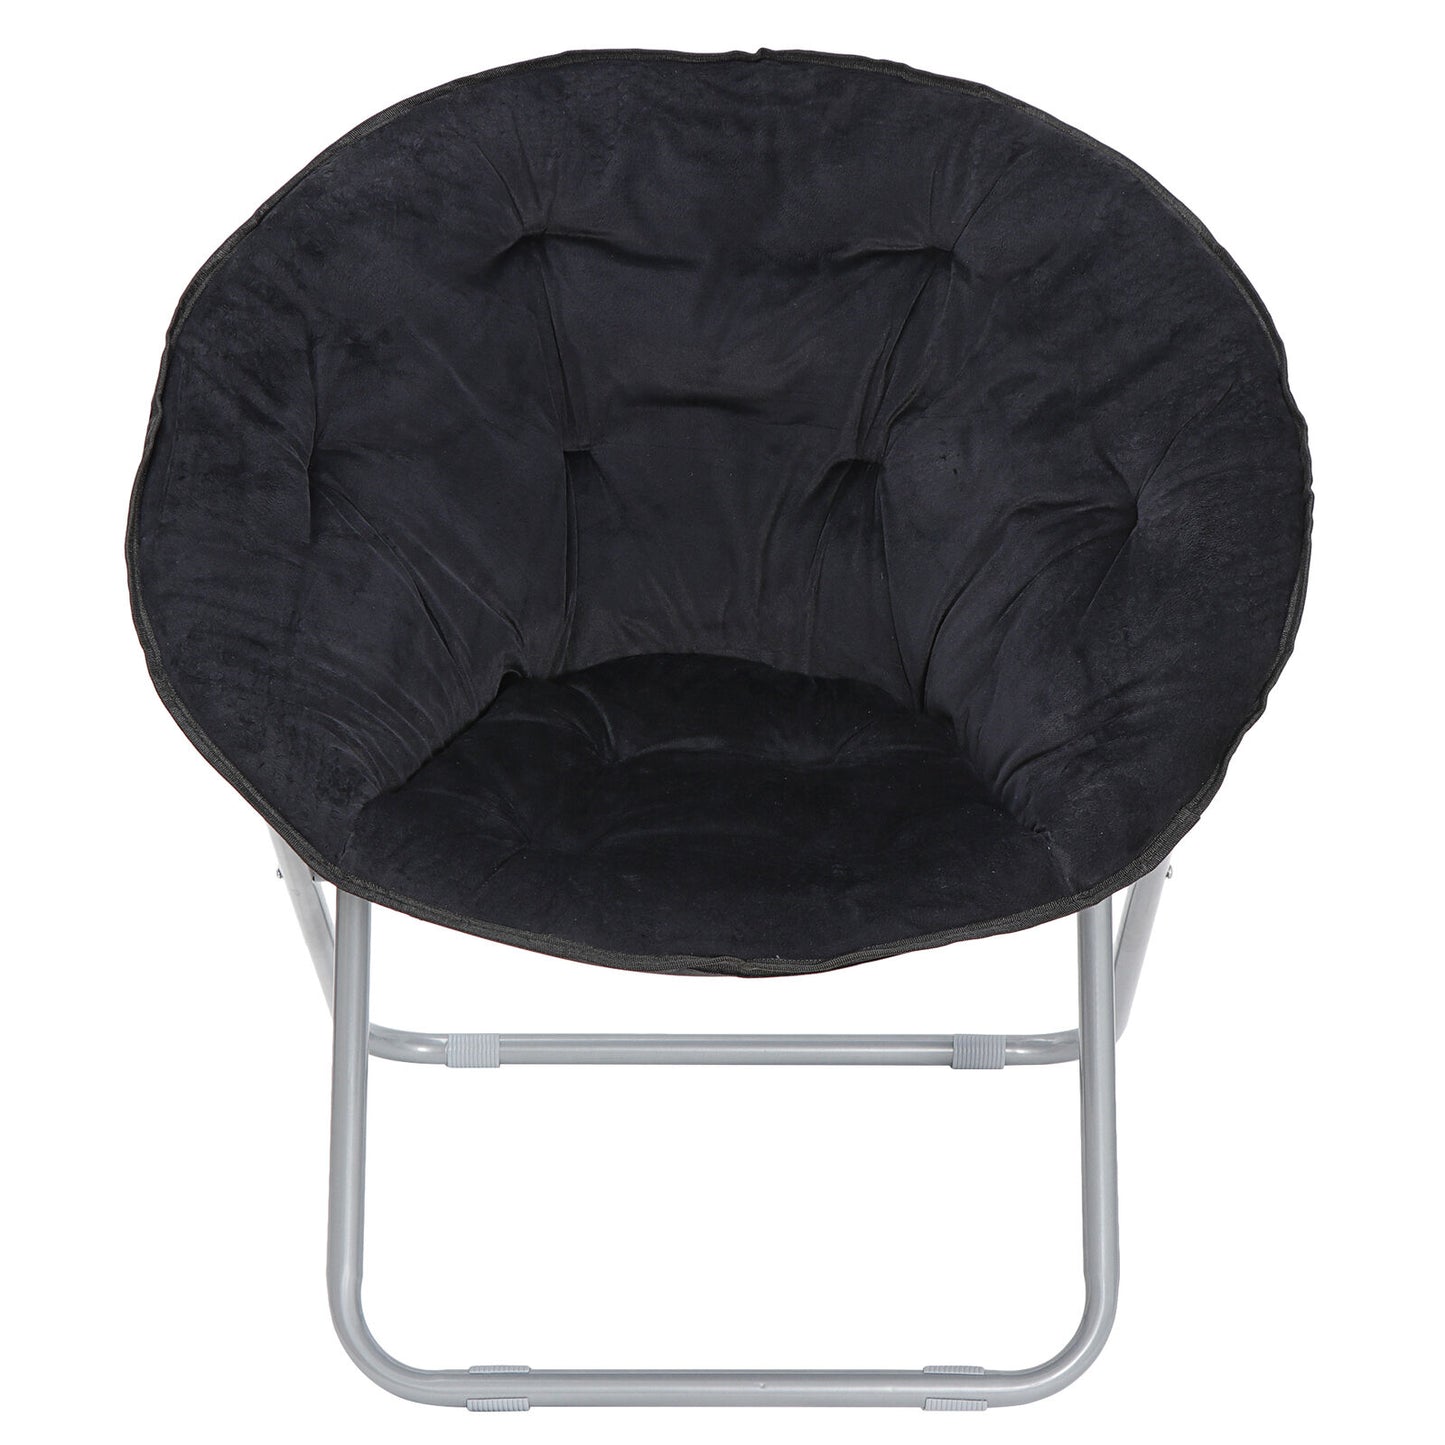 Oversized Moon Chair Seat Stool Saucer Soft Folding Home Living Room Sofa Black